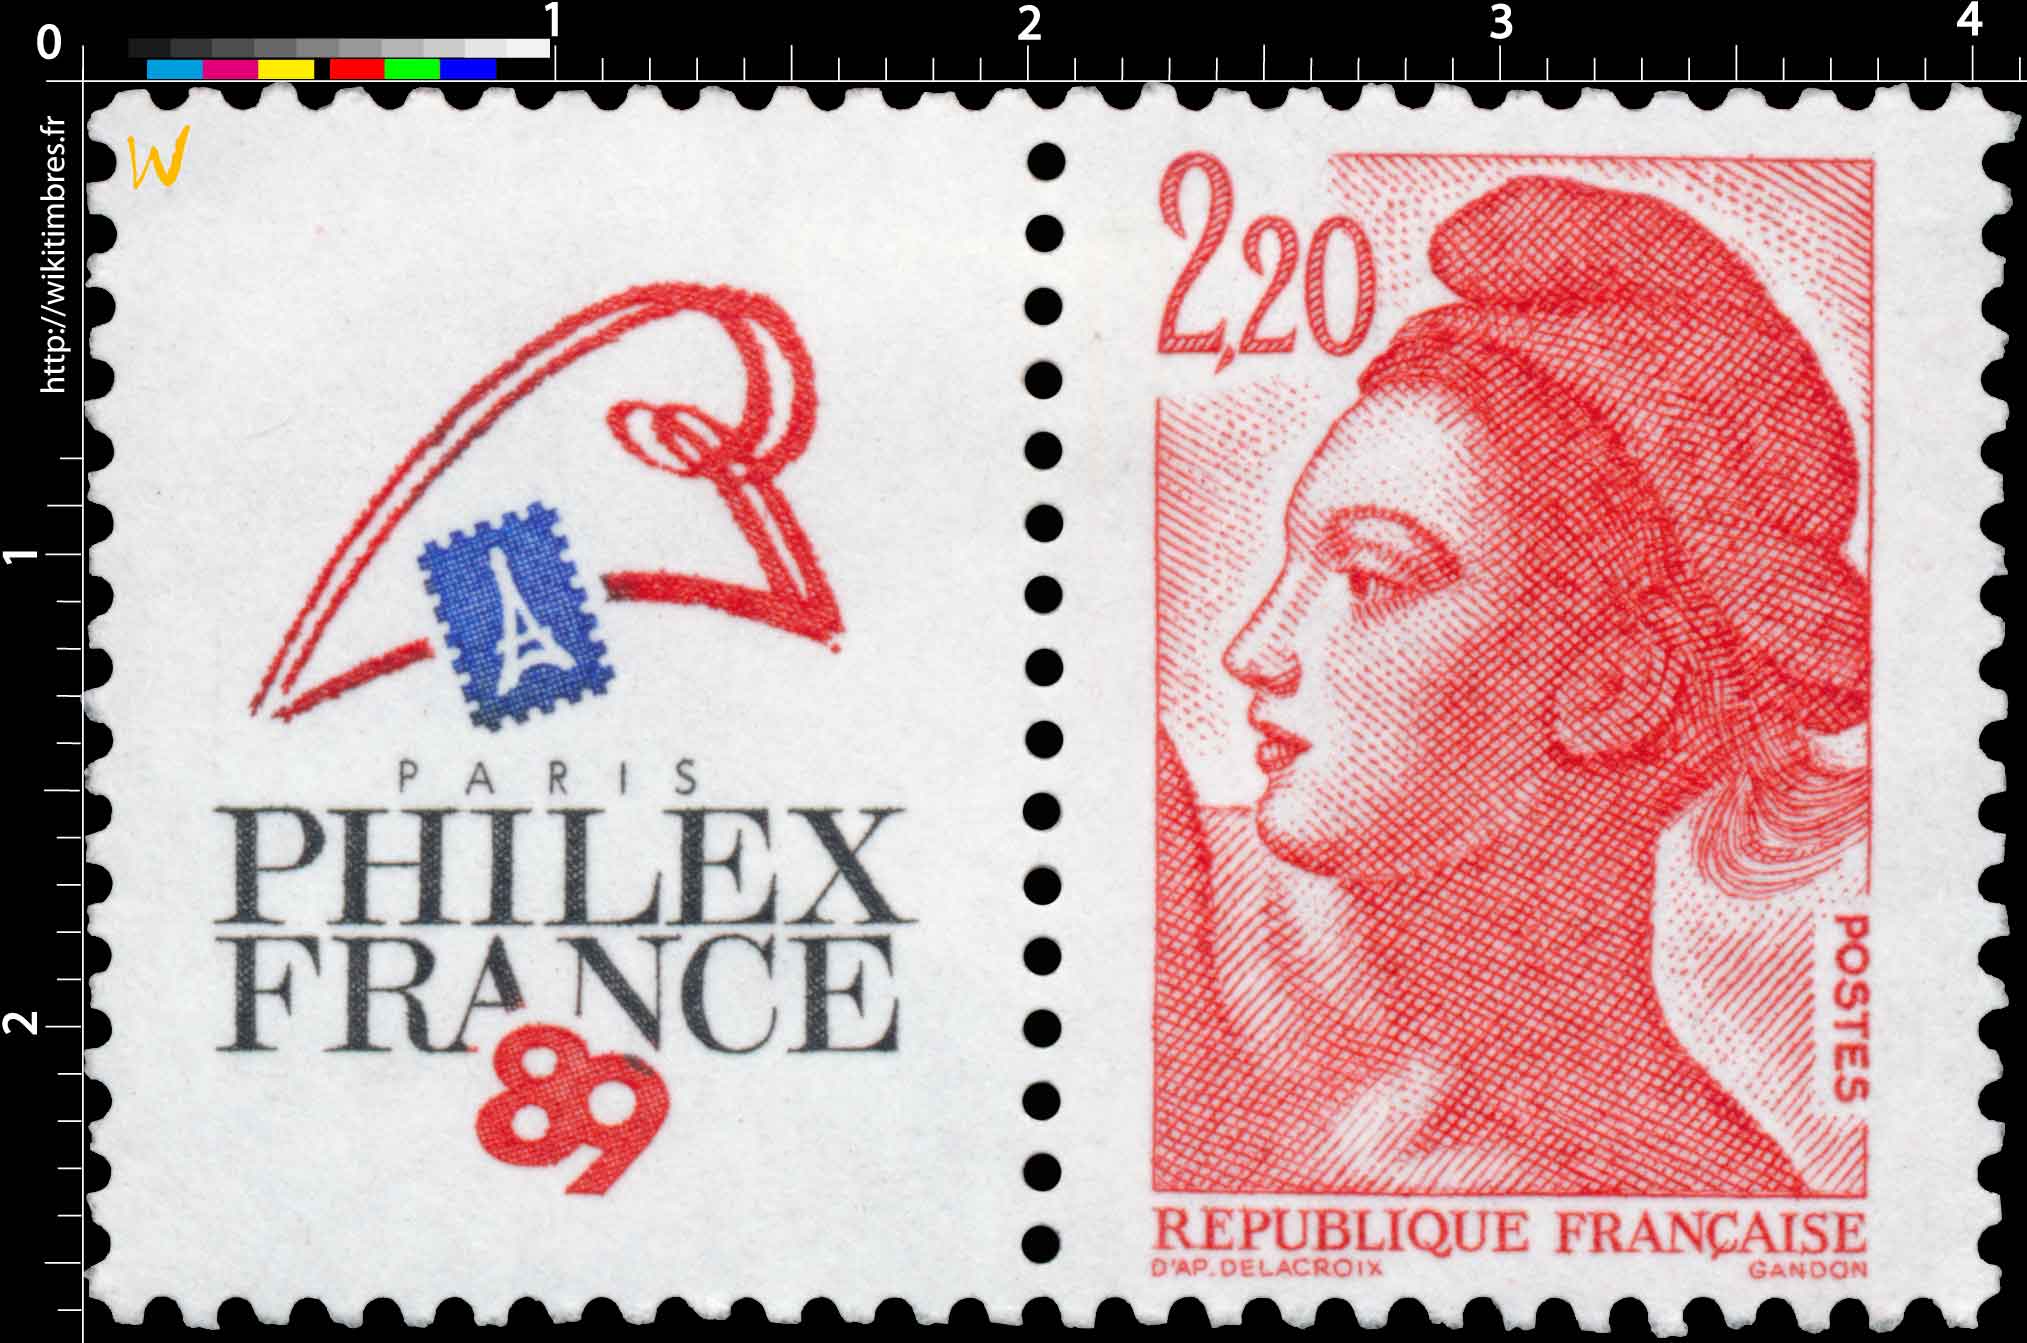 PARIS PHILEXFRANCE 89